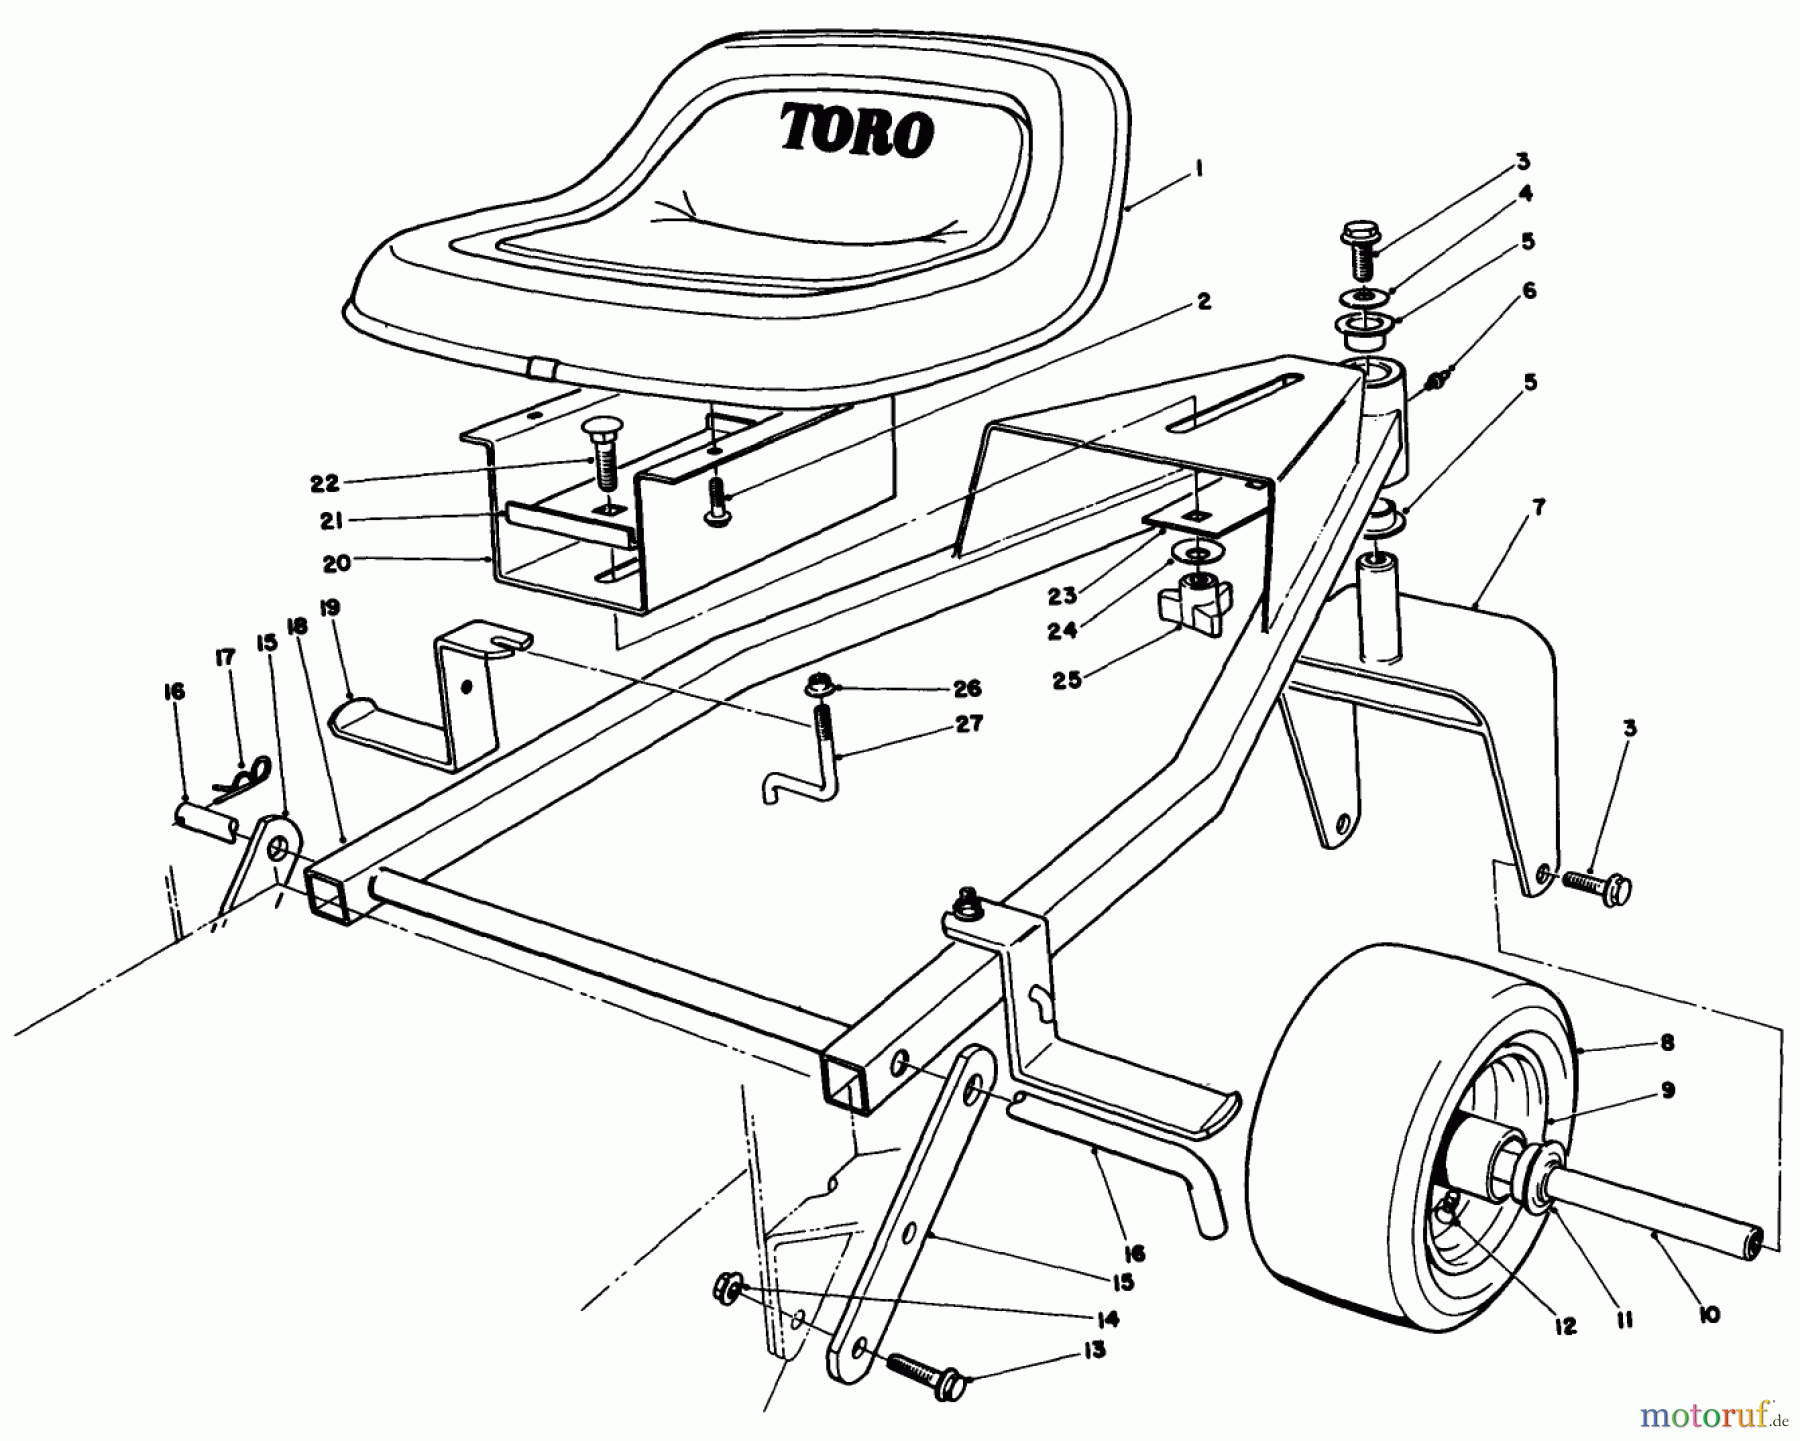  Toro Neu Mowers, Deck Assembly Only 30152 - Toro 52